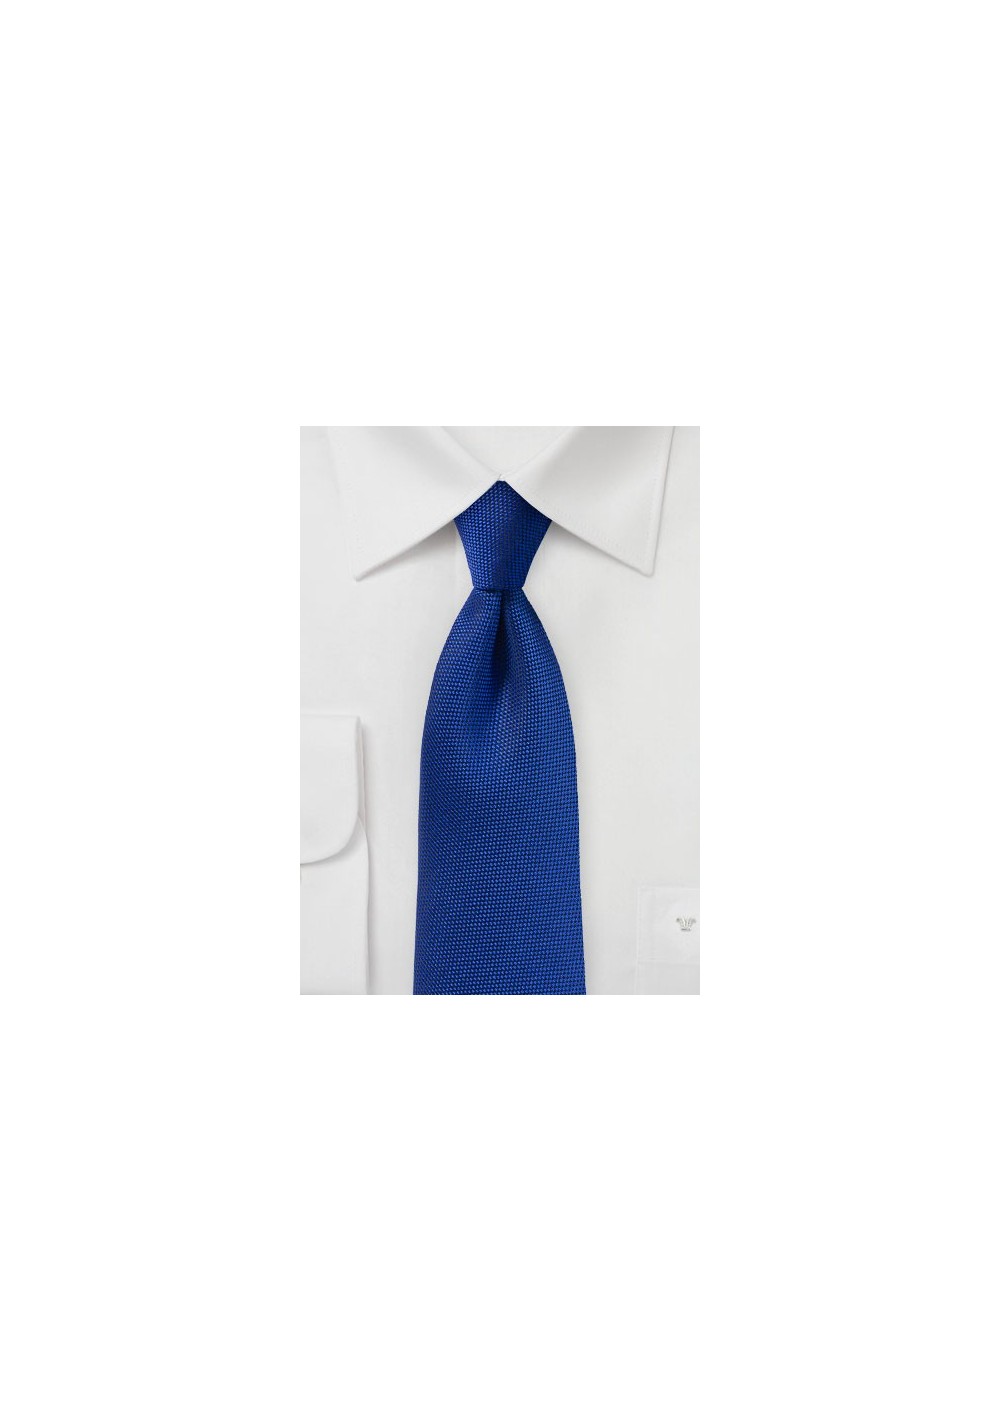 Matte Woven Tie in Marine Blue